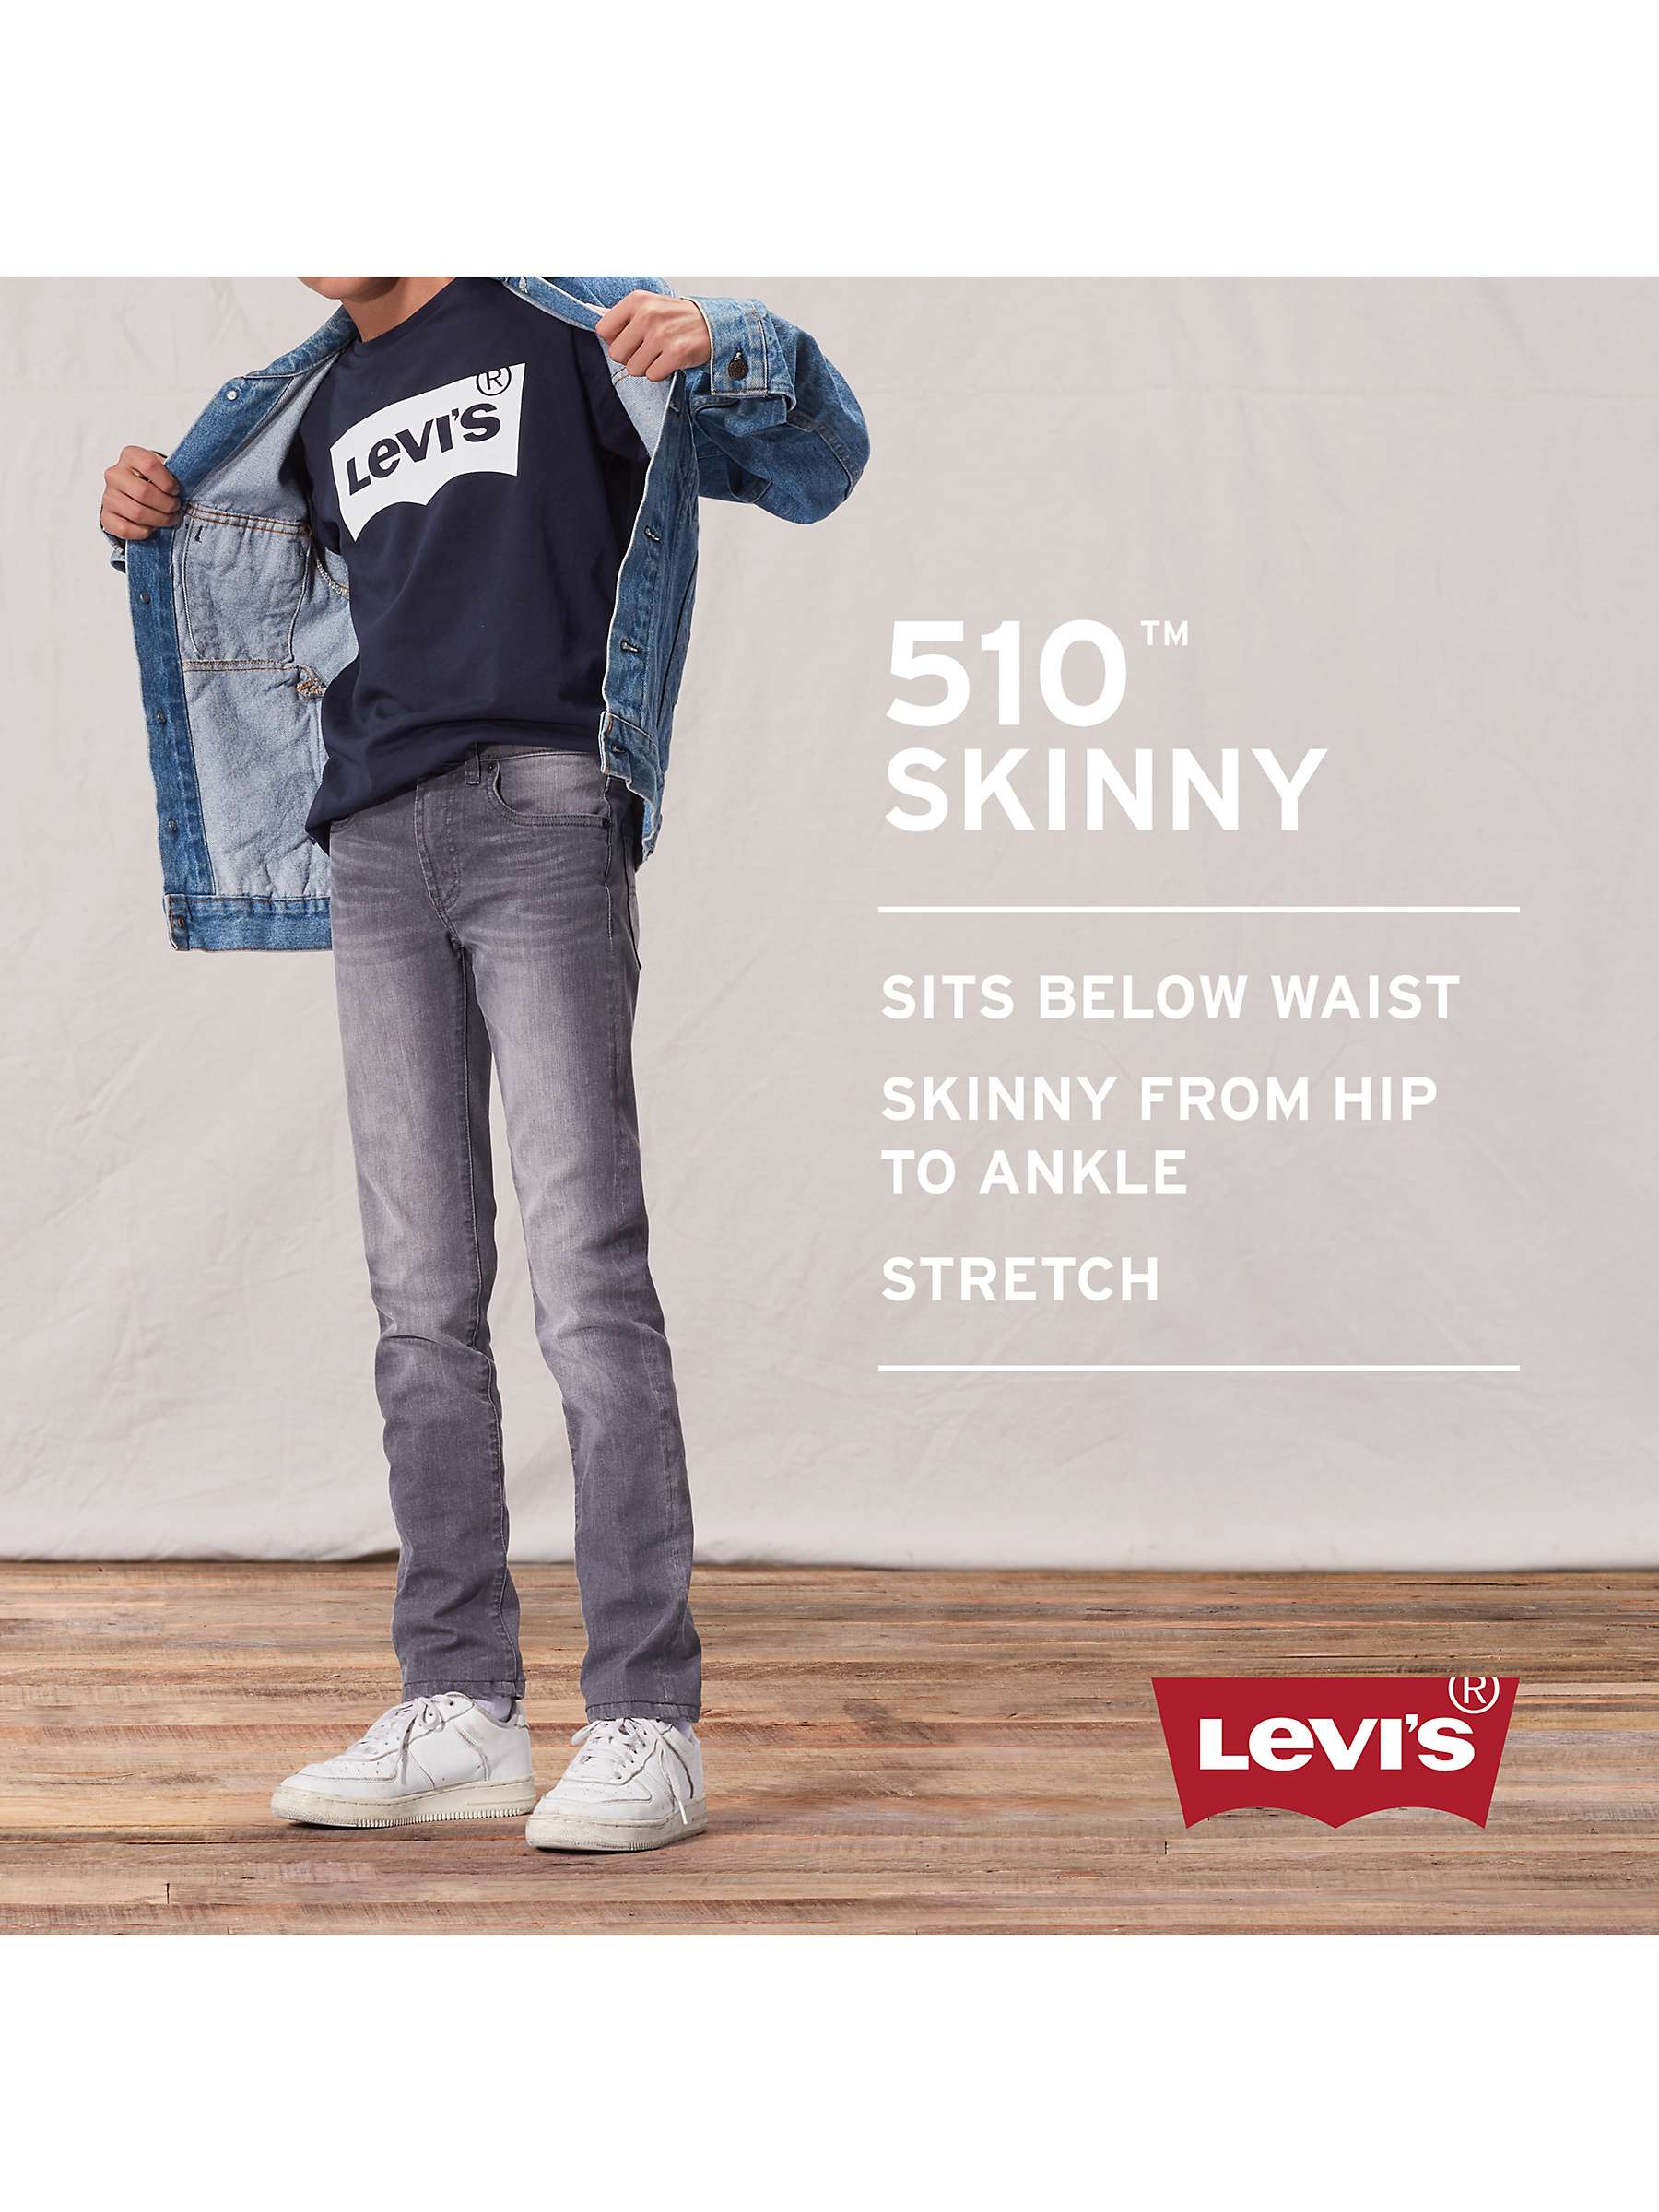 plaintiff unstable Magnetic Levi's Boys' 510 Skinny Fit Jeans, Dark Blue at John Lewis & Partners